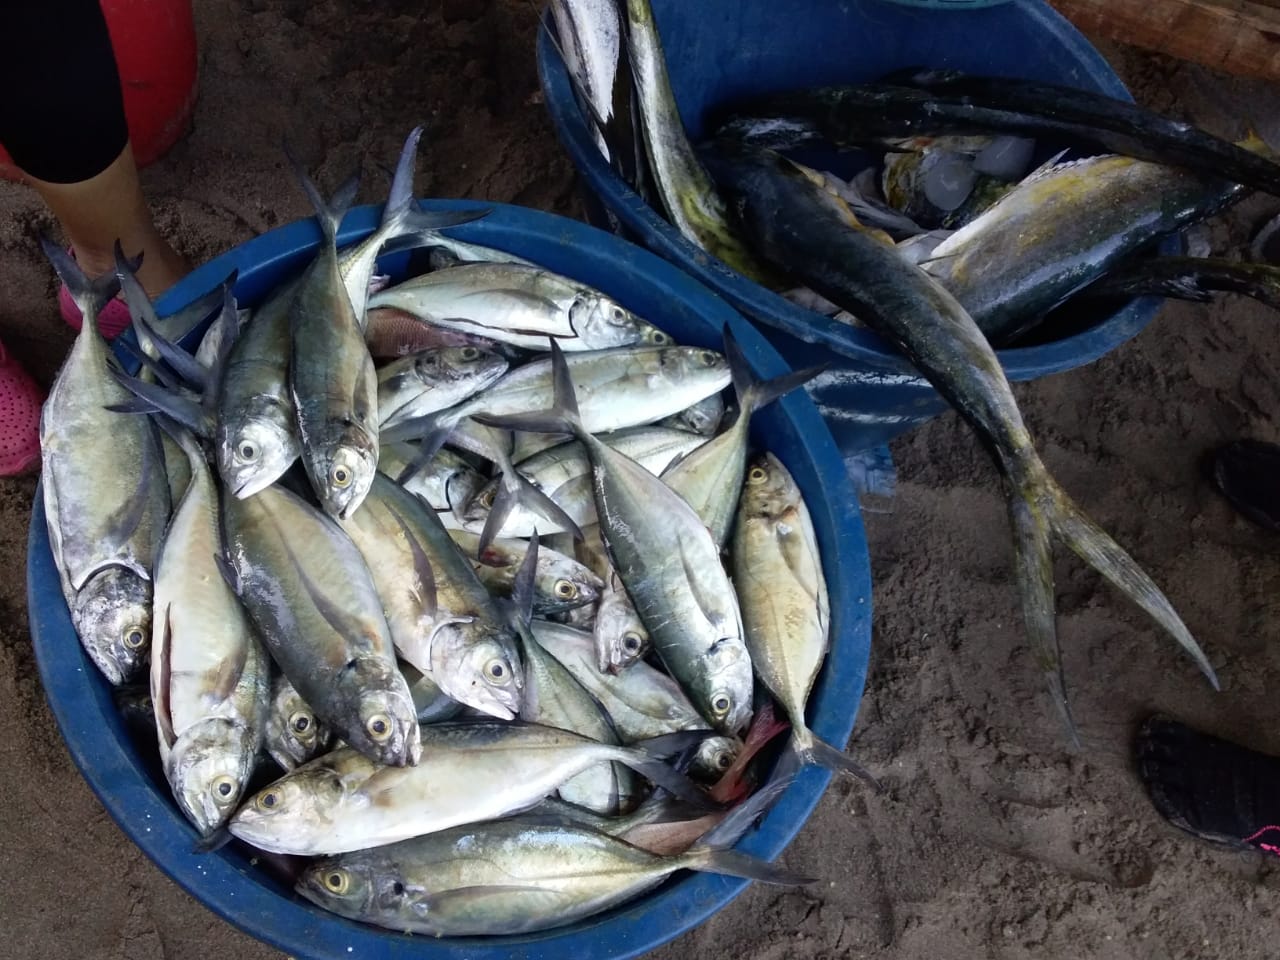 Pescadores de Masachapa continúan venta de mariscos libres de Marea Roja